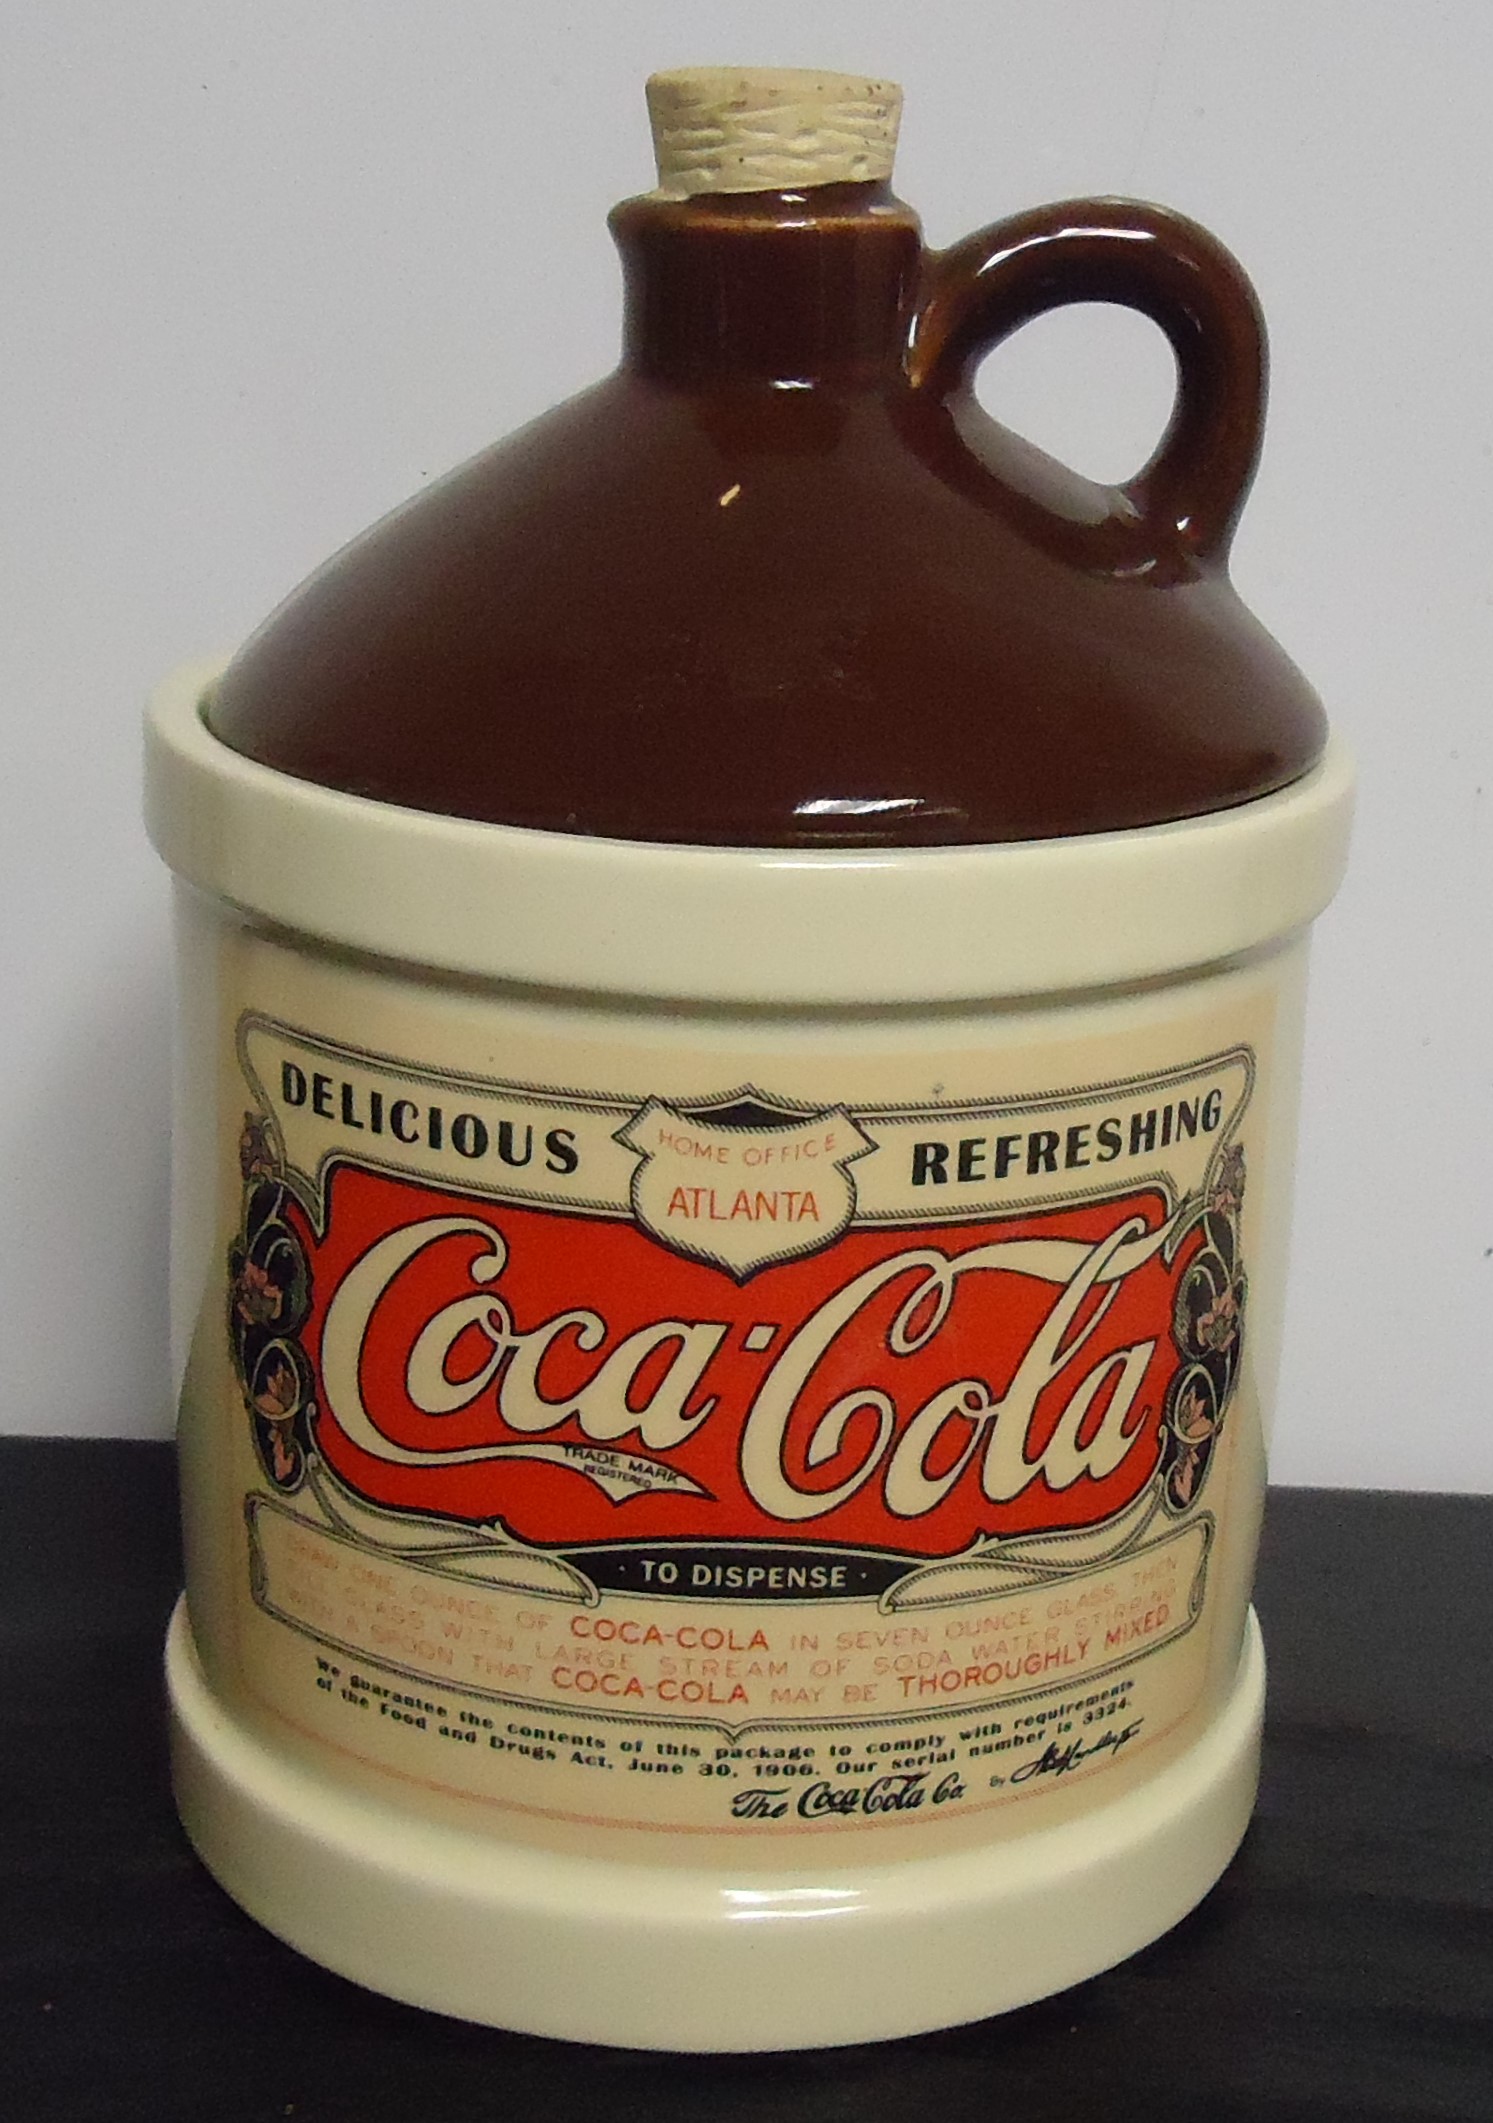 (4) Coca-Cola Jug
Cookie Jar (McCoy)
$60.00
